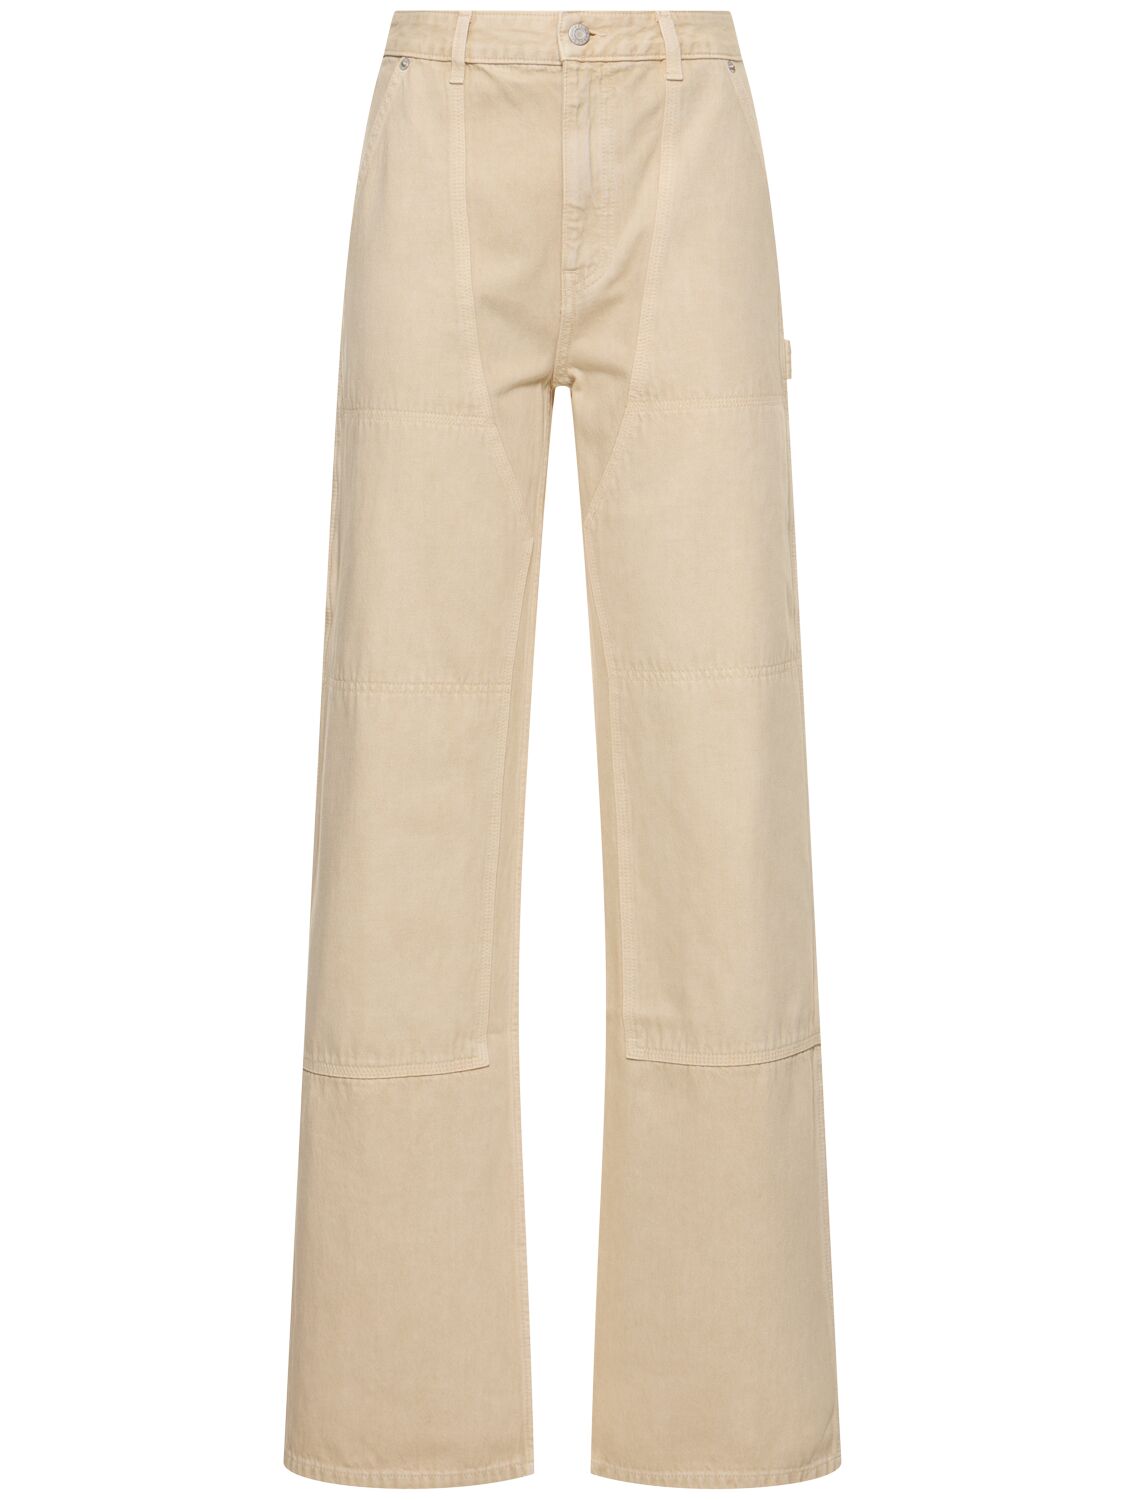 Image of Carpenter Cotton Pants